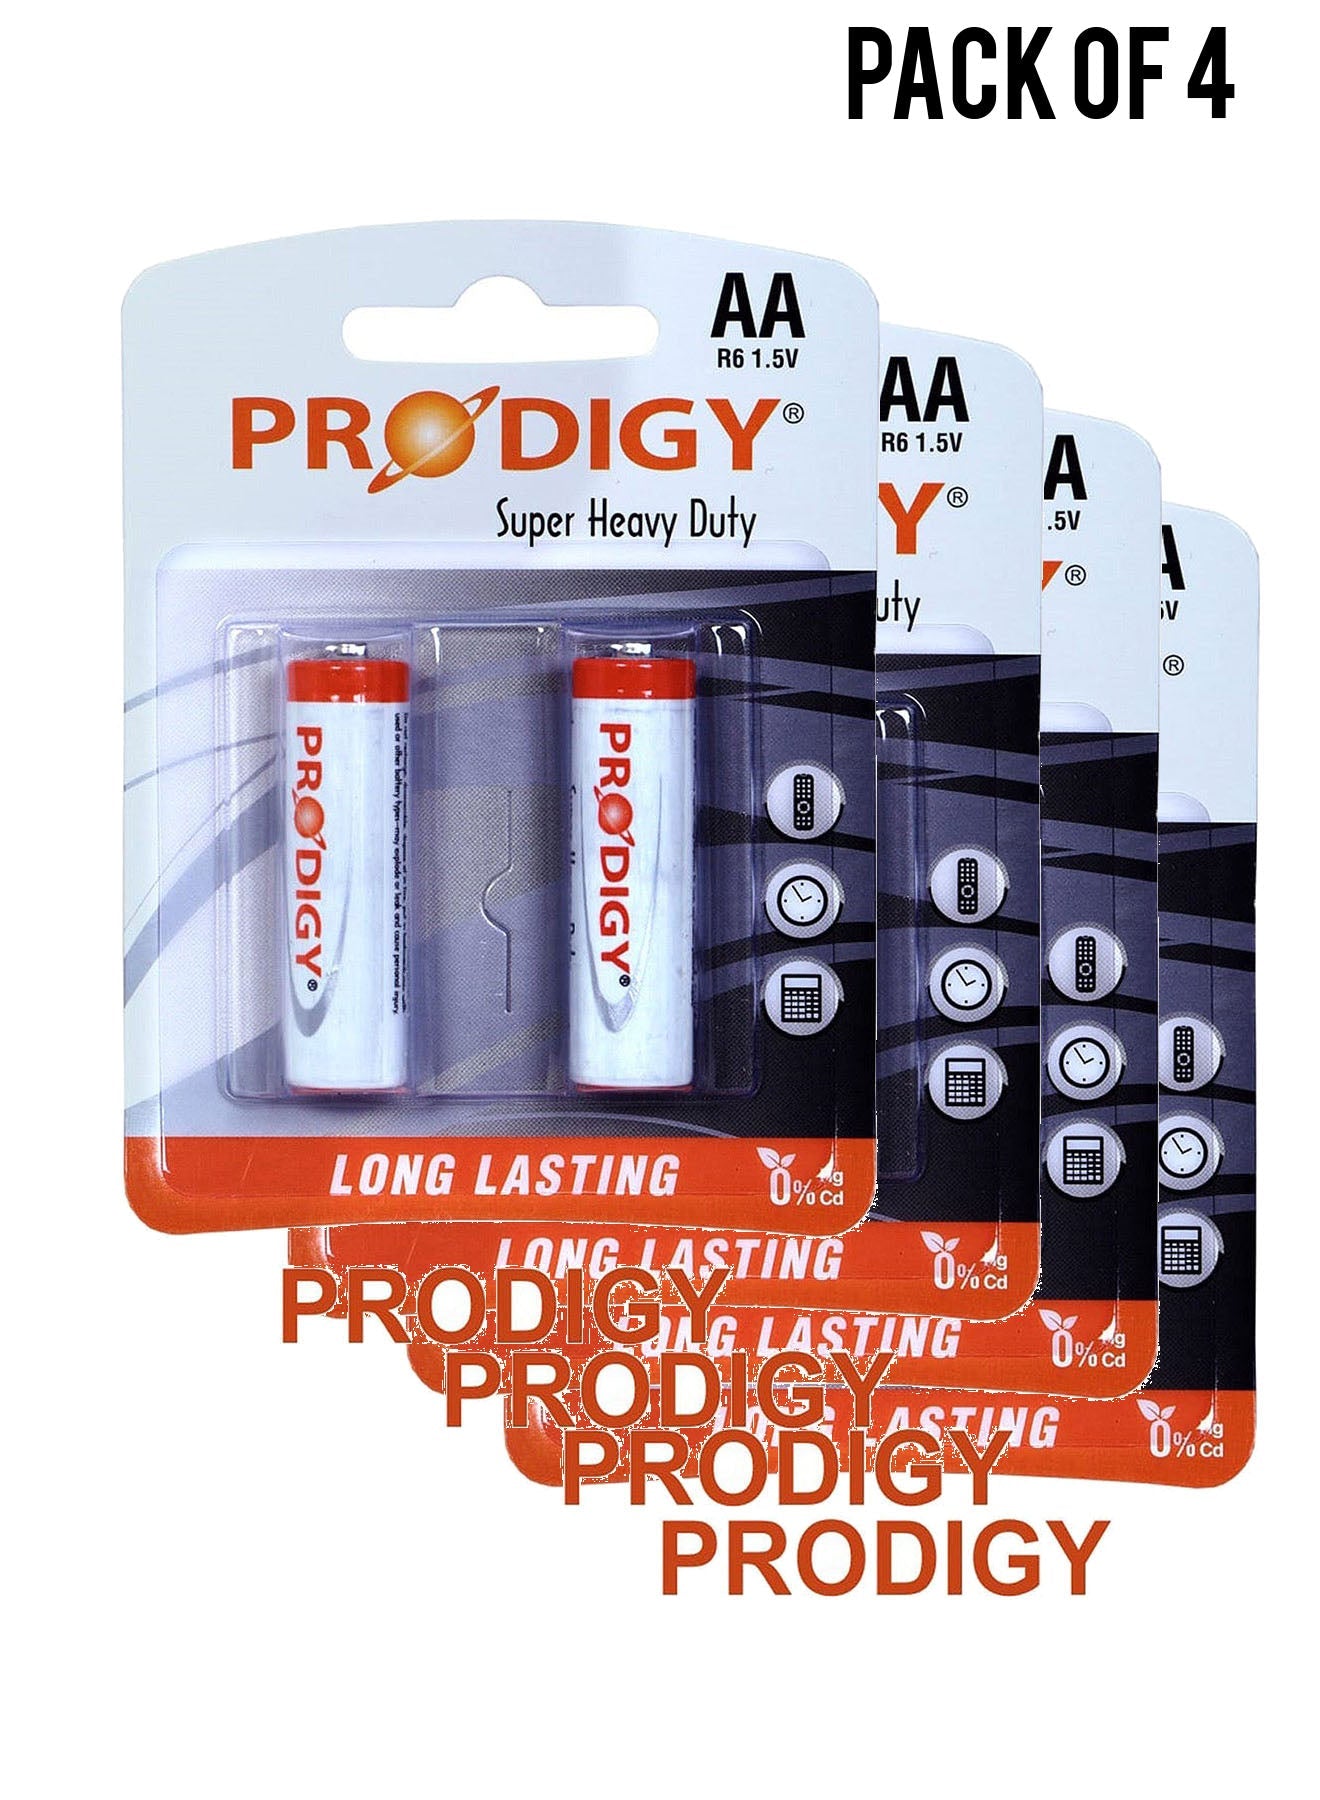 Prodigy Super Heavy Duty R6PVC 15V AA2 Value Pack of 4 